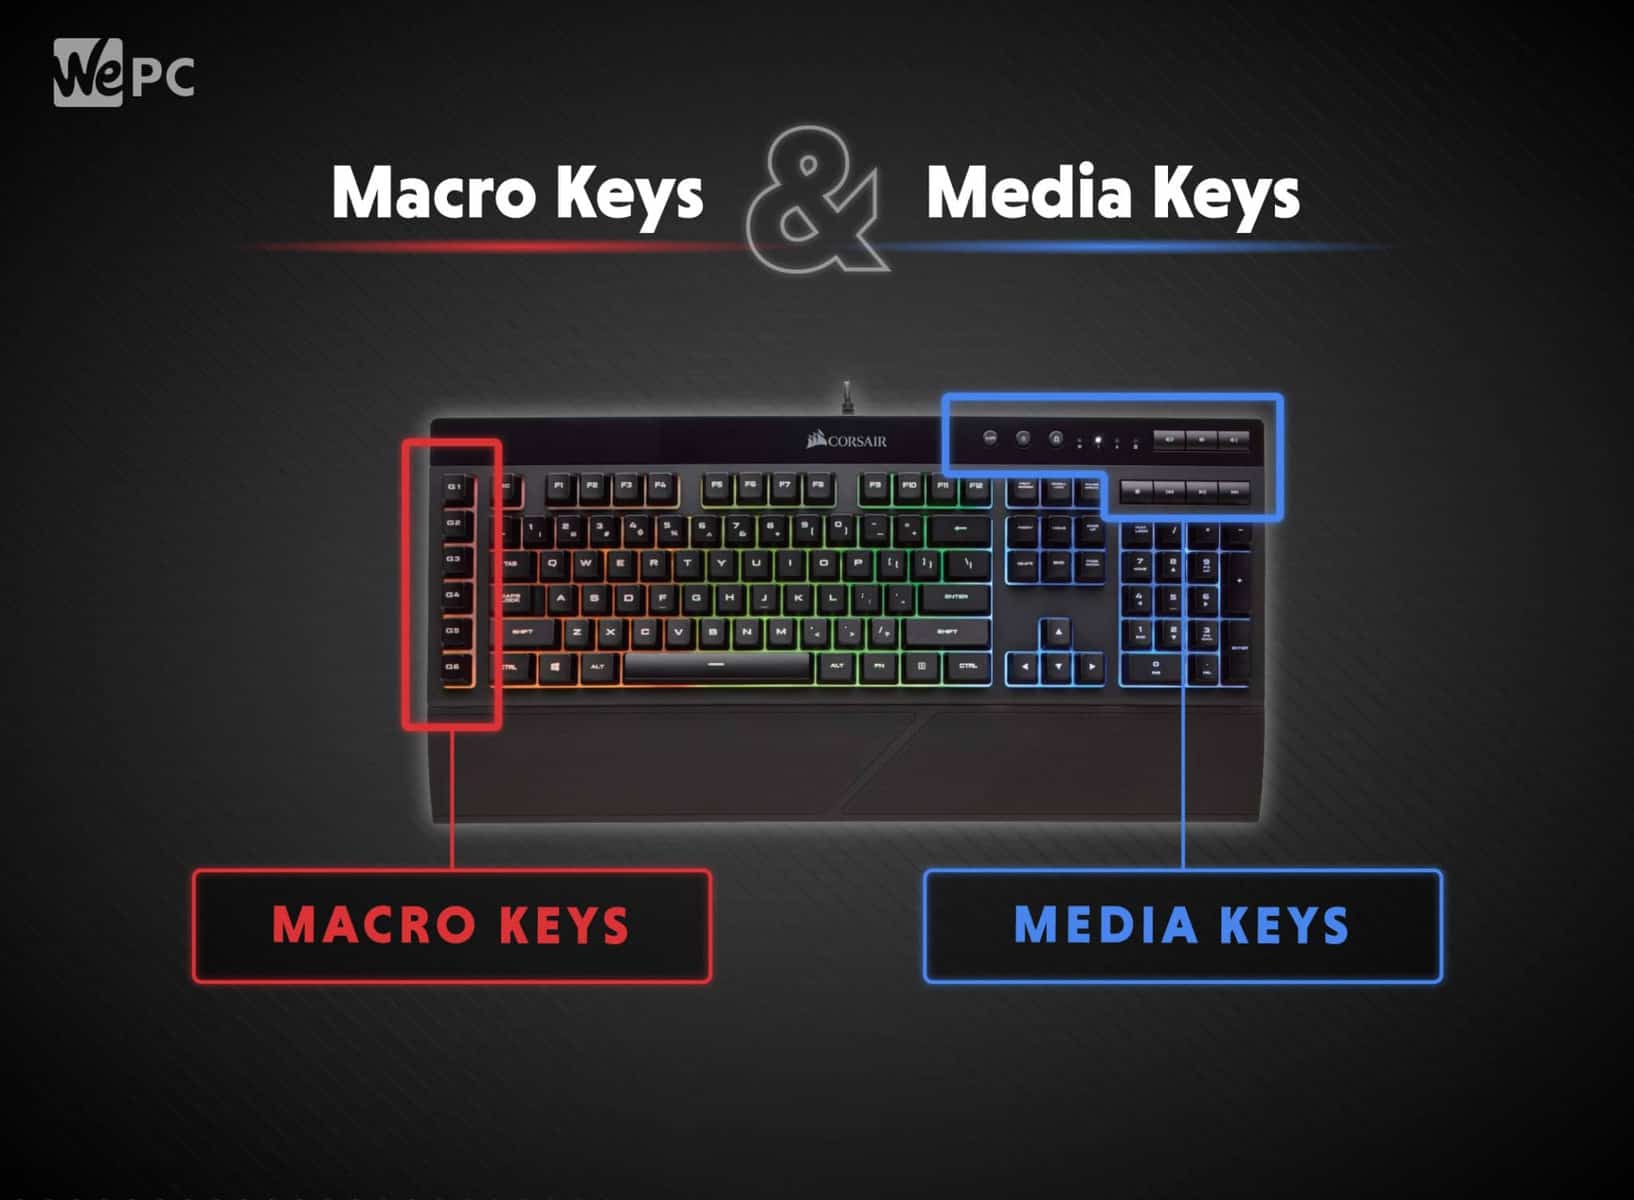 MACRO Keys and MEDIA Keys